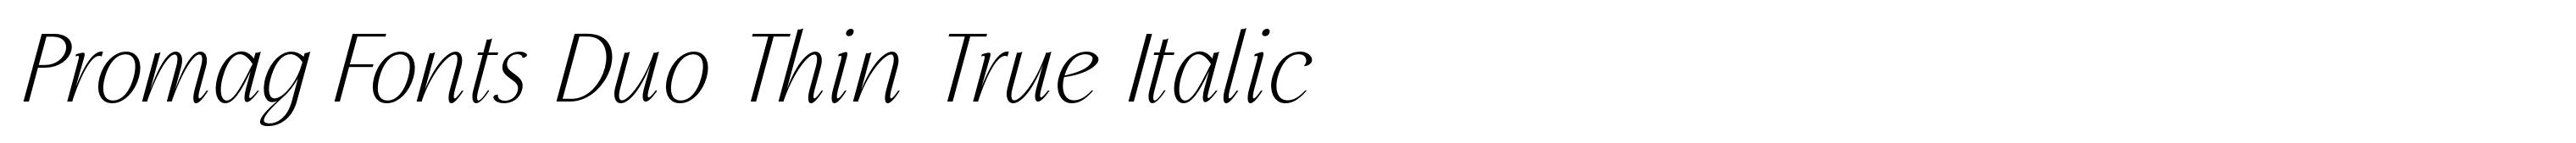 Promag Fonts Duo Thin True Italic